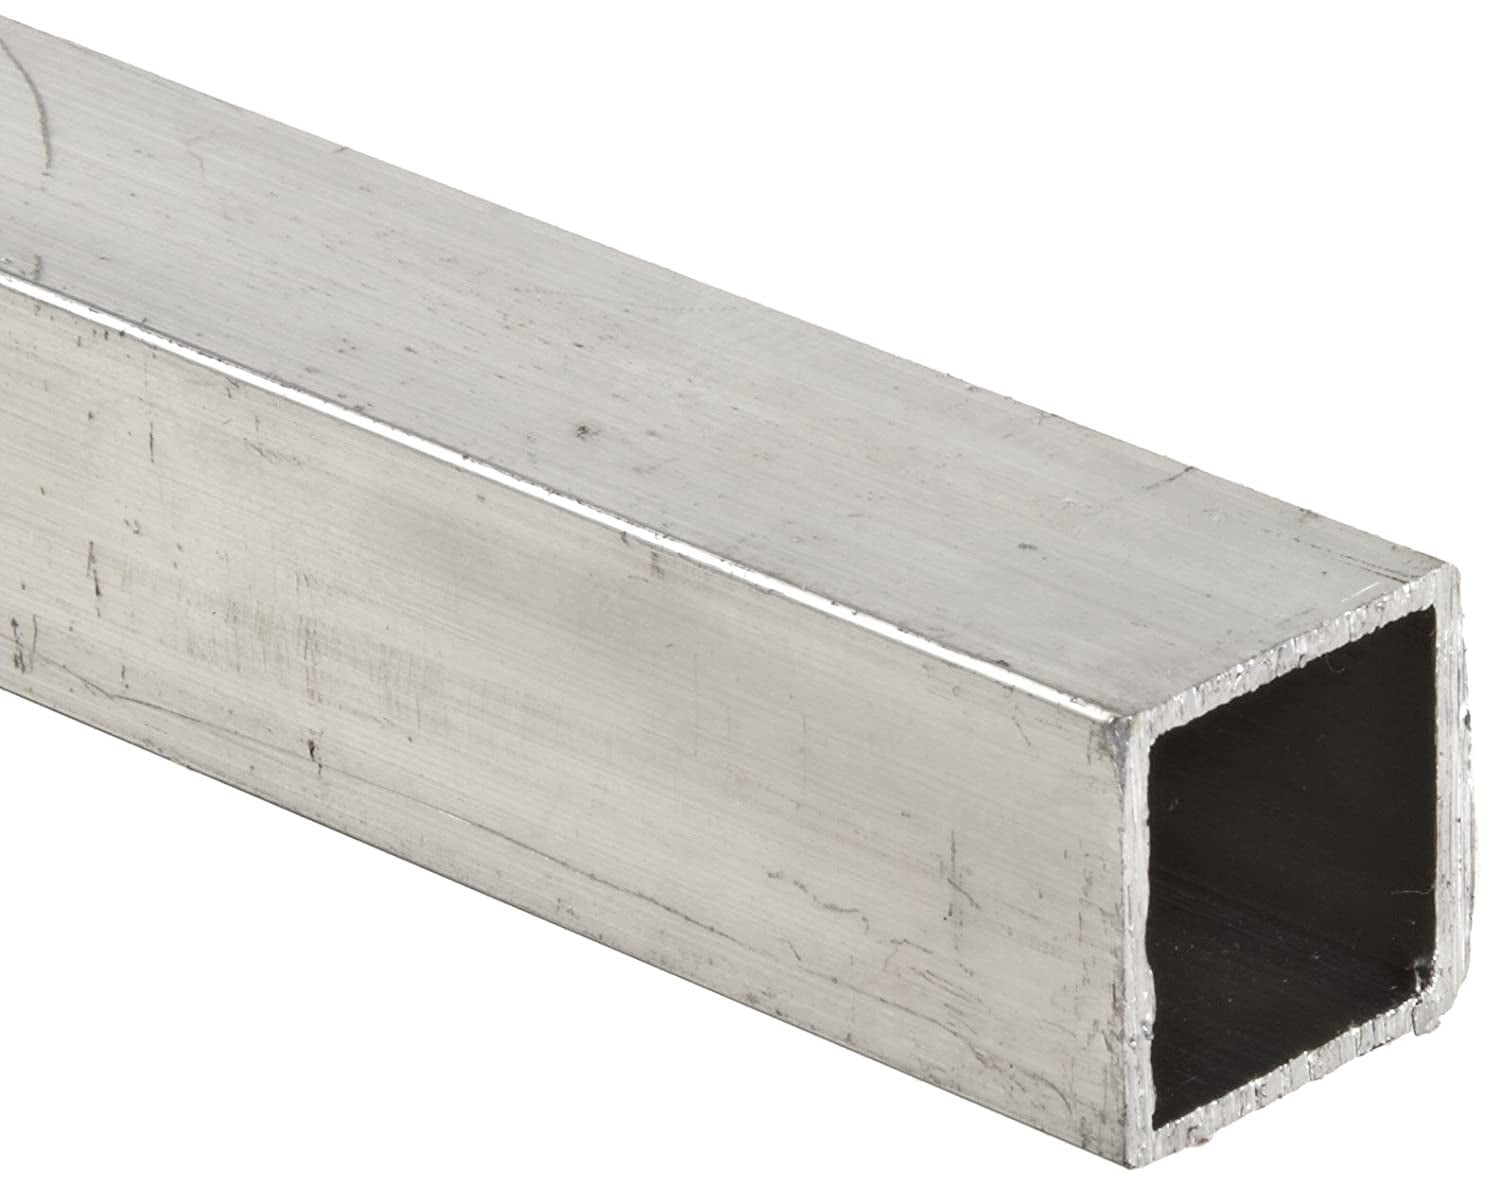 1/8 Wall Aluminum 6063-T52 Square Tubing 3 x 3 ASTM B221 84 Length